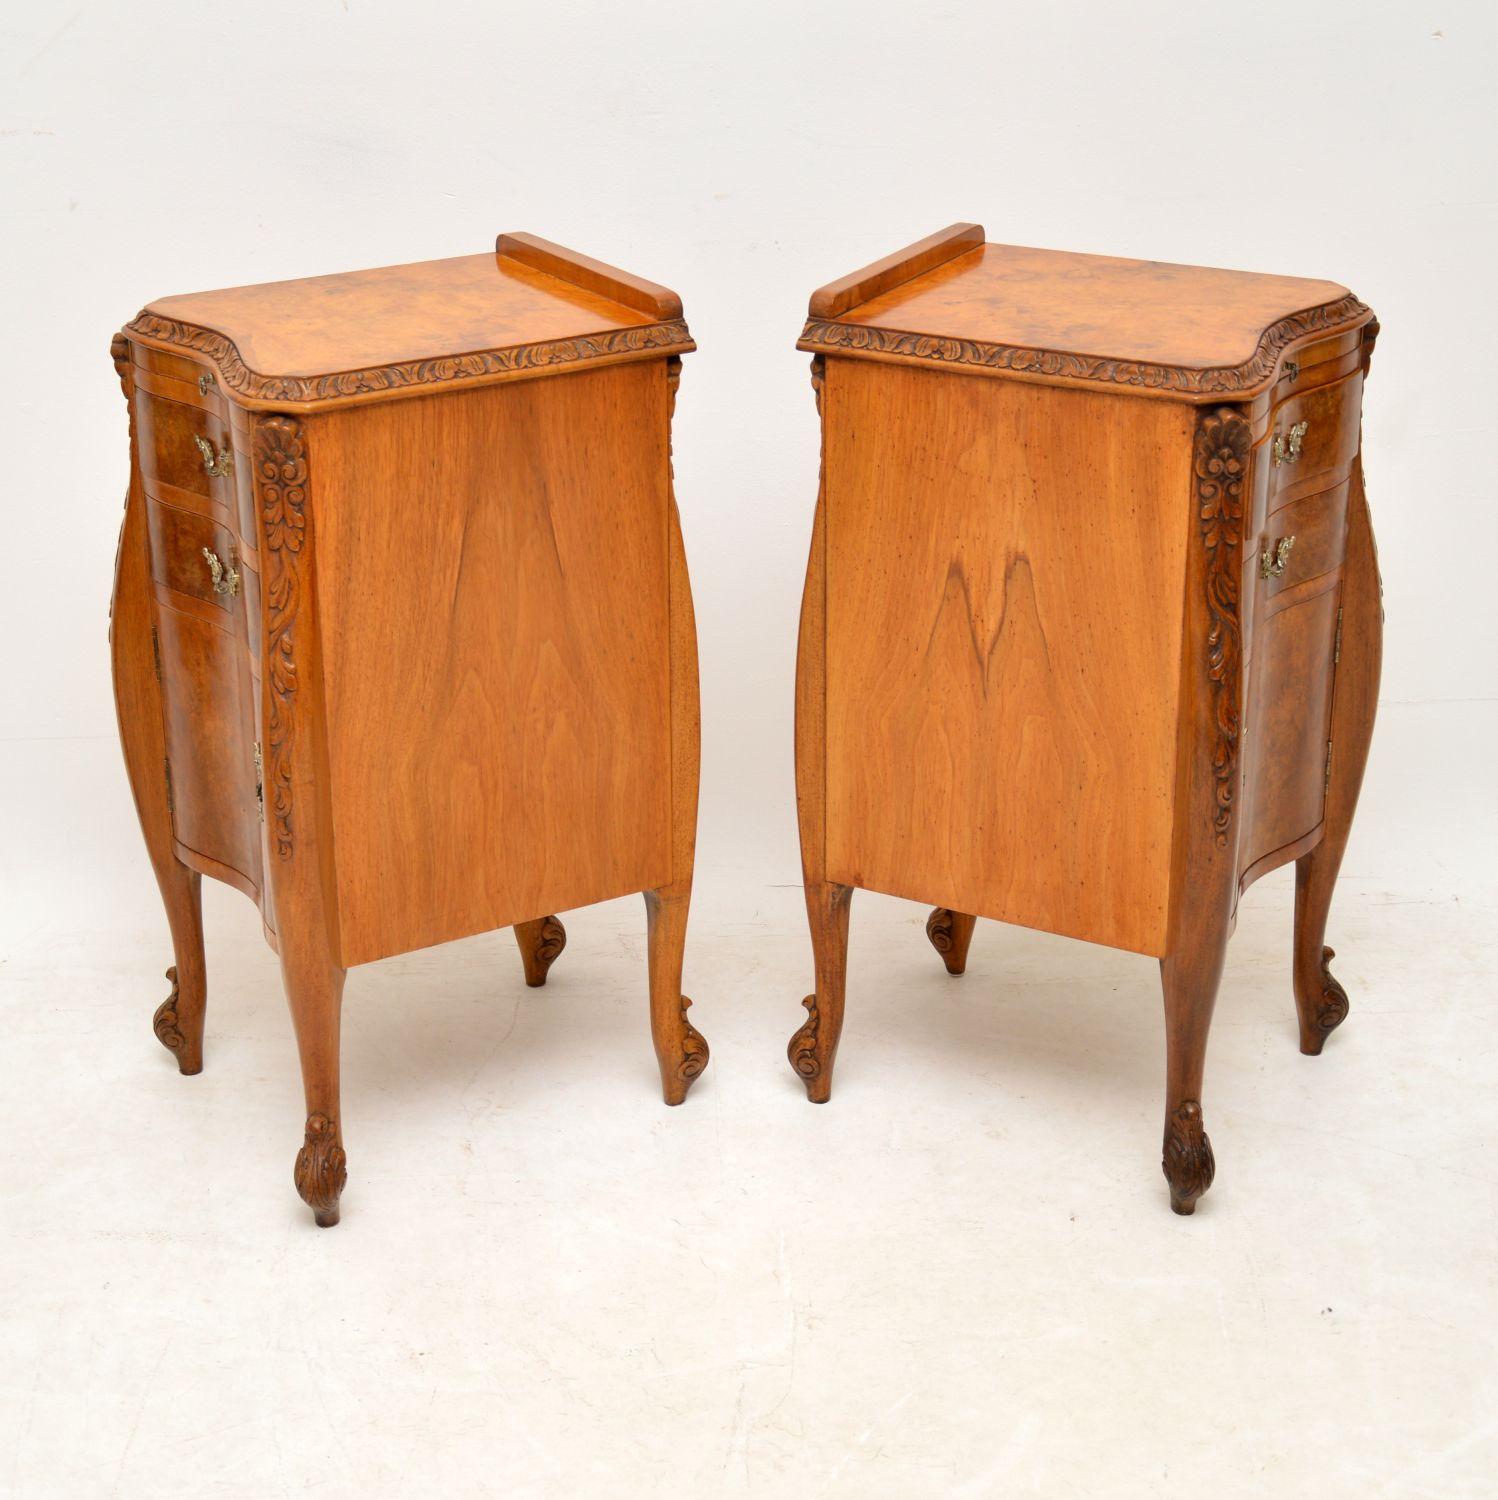 British Pair of Antique Burr Walnut Bedside Cabinets